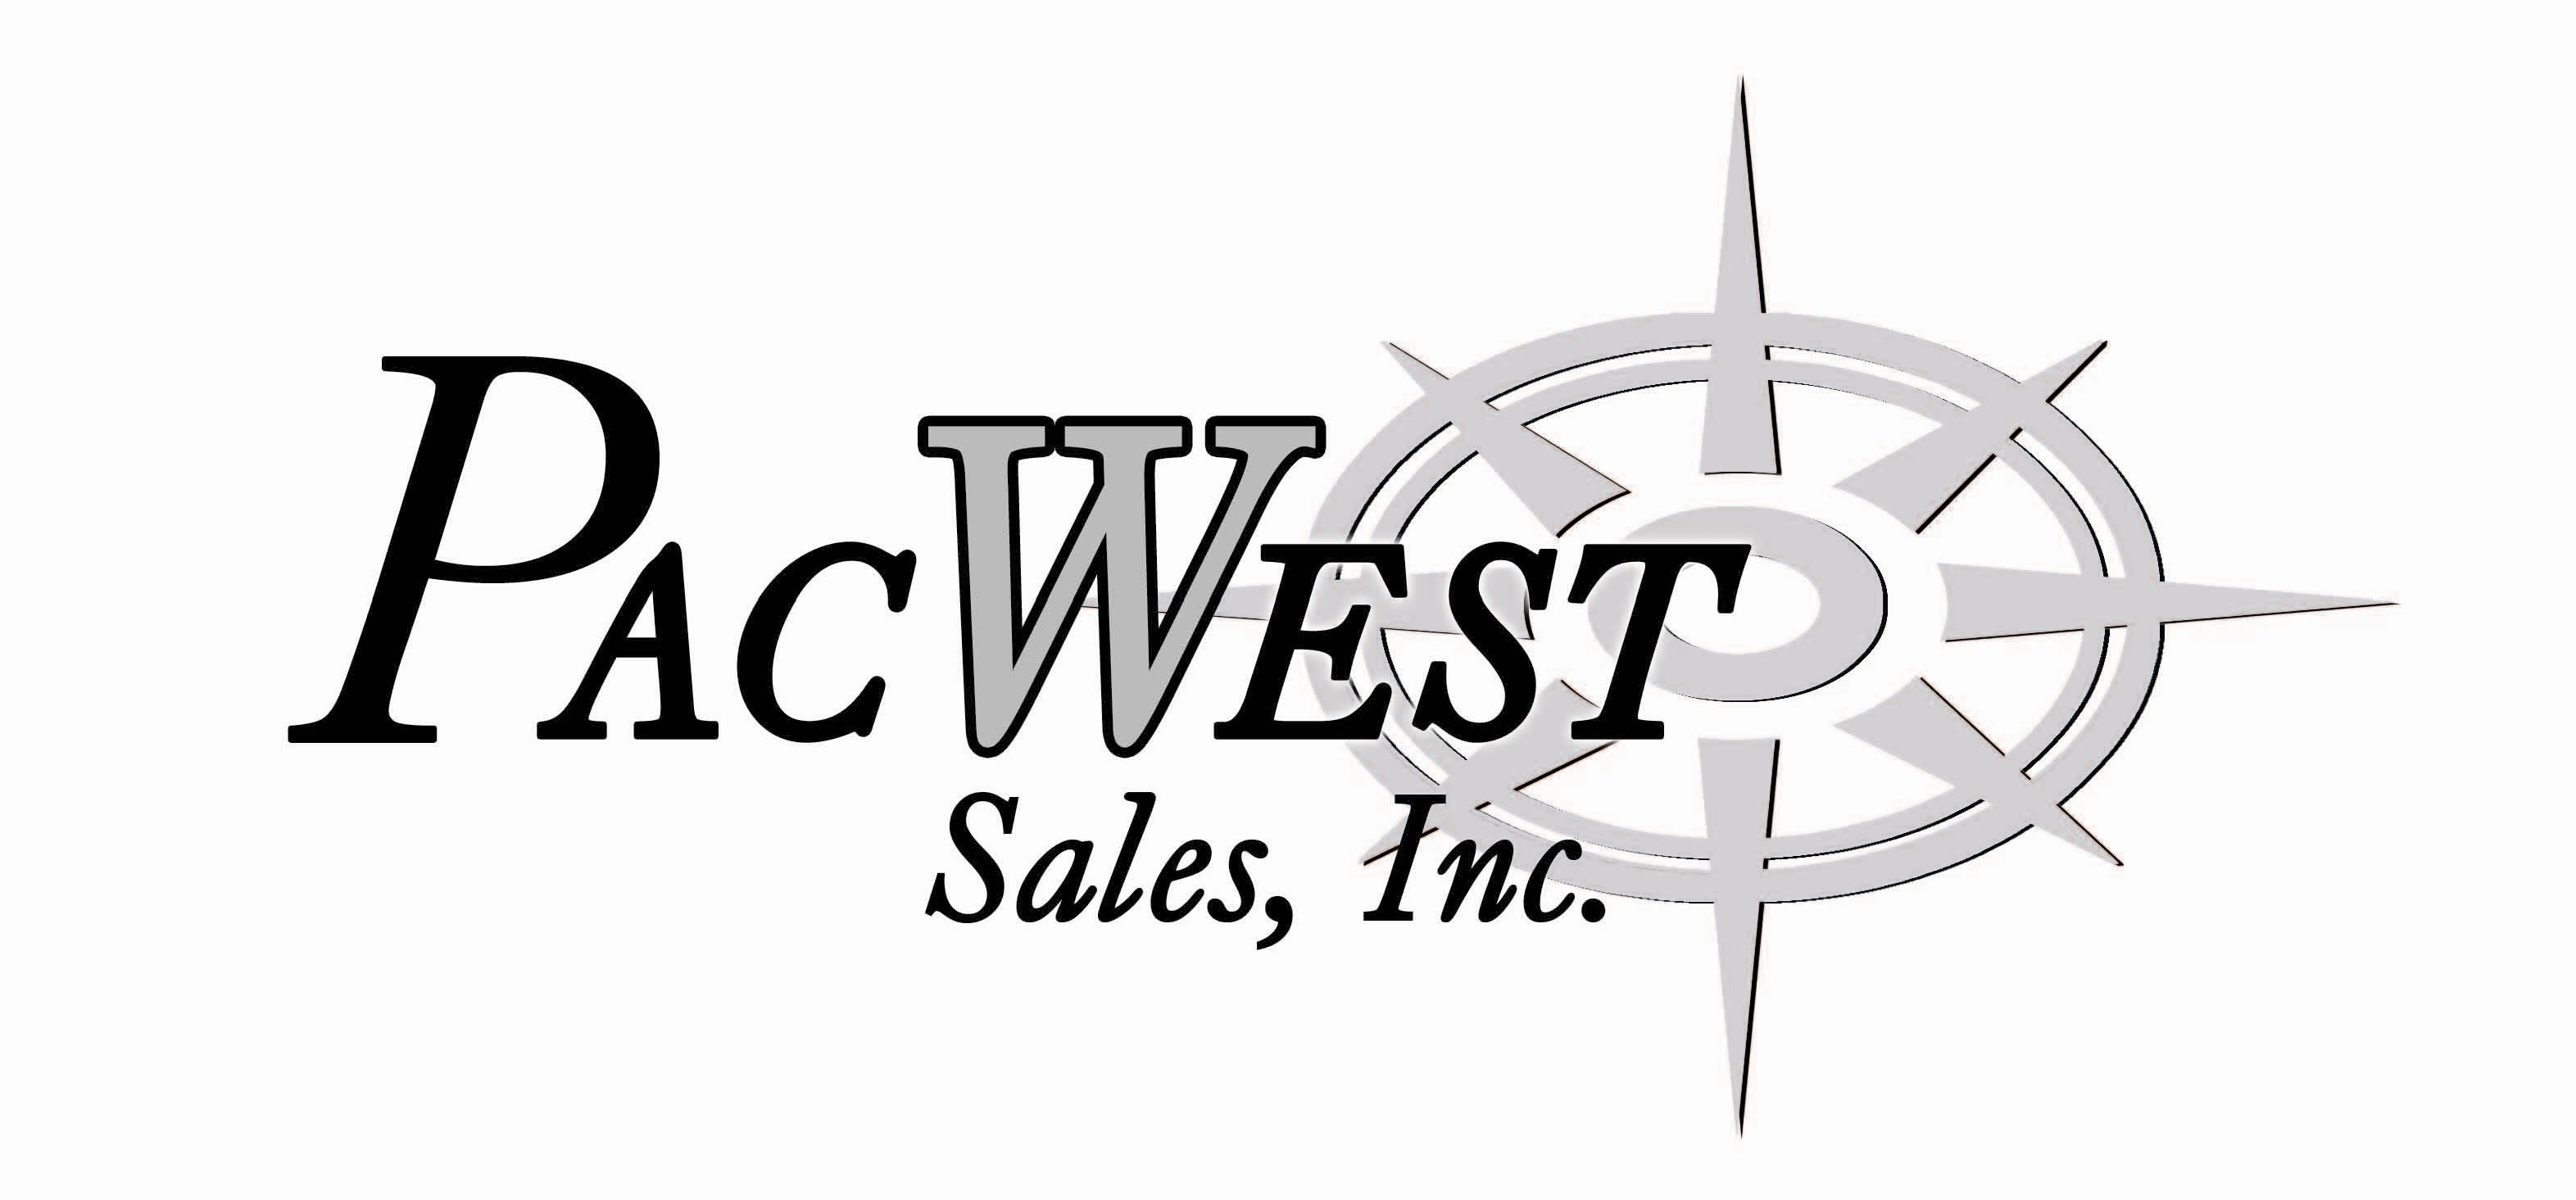 PacWest Sales, Inc.